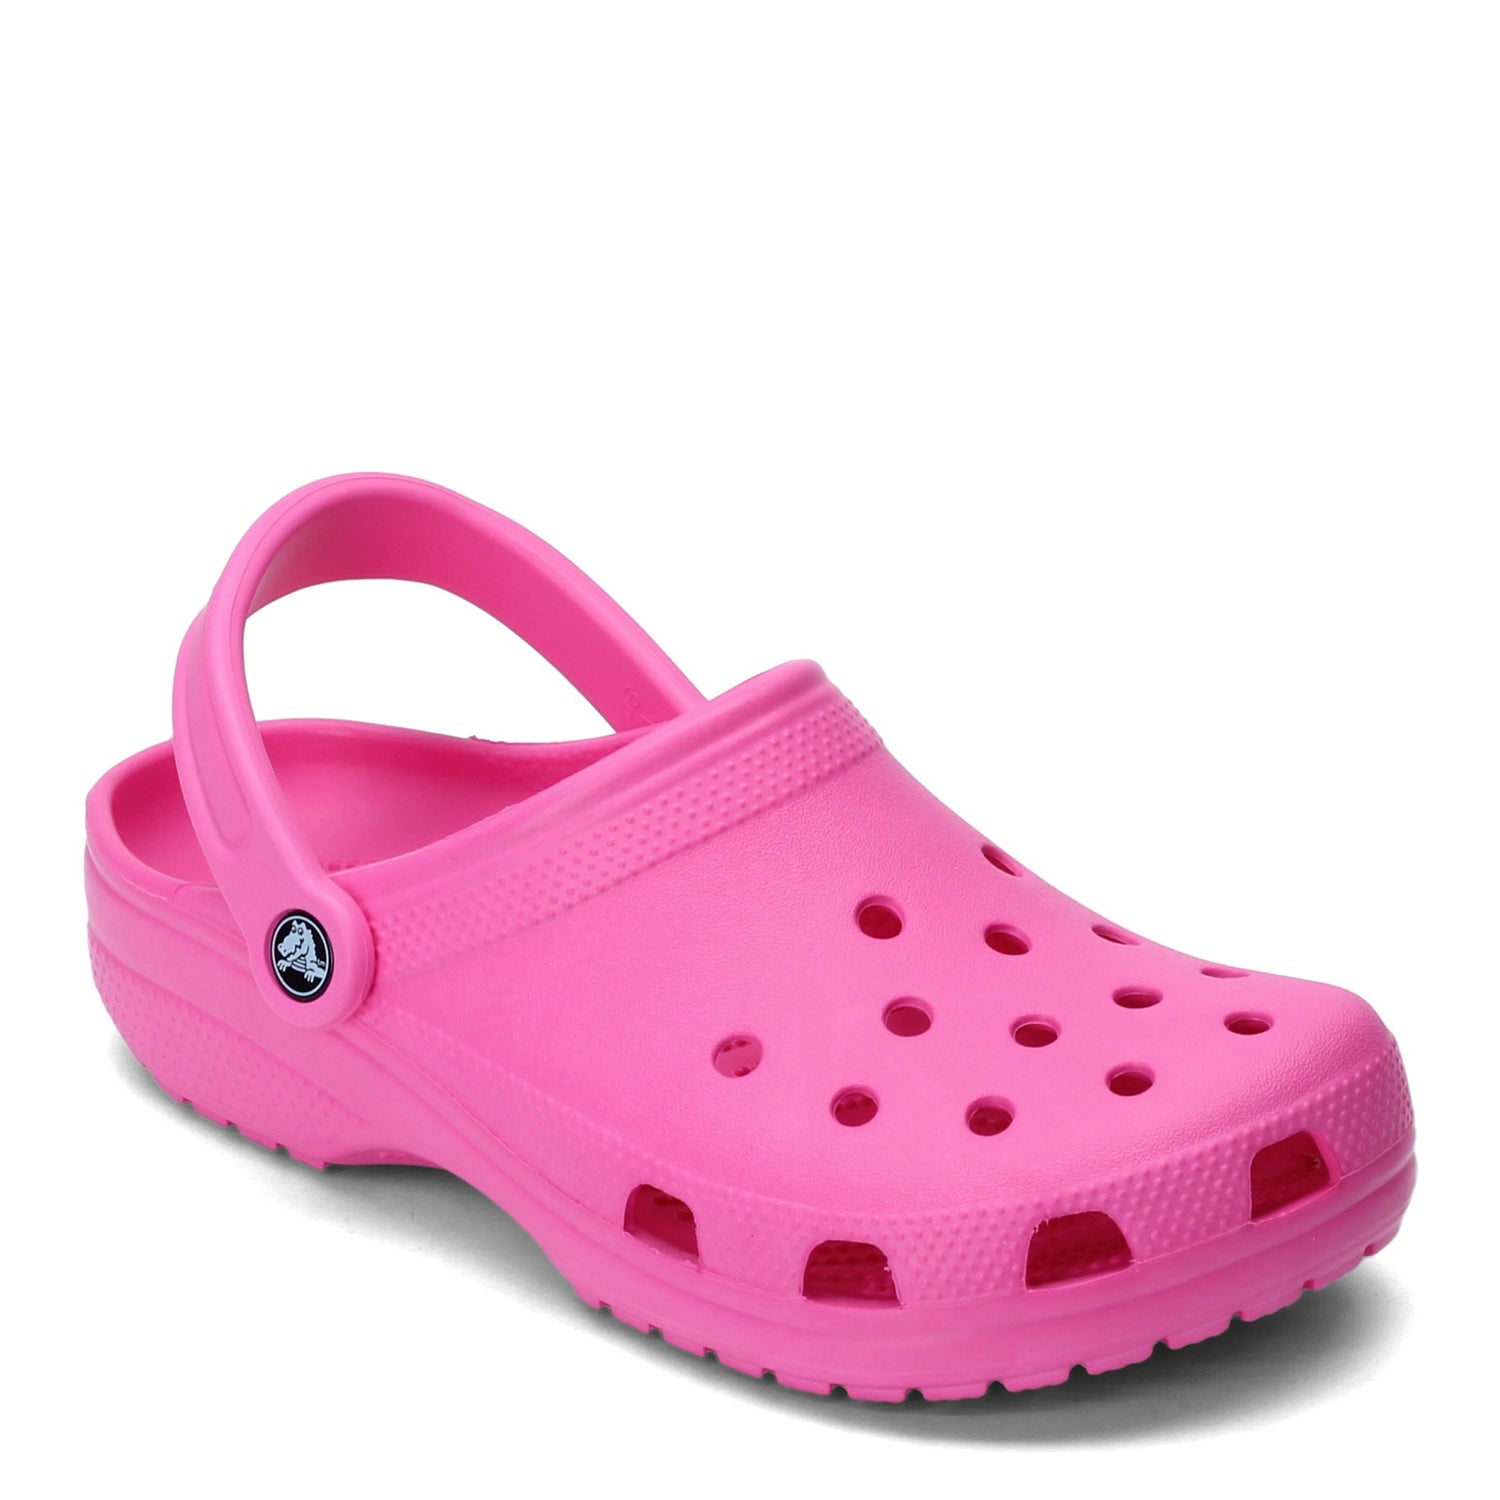 Crocs Classic Clog Youth Size 3 Electric Pink 204536 6QQ New